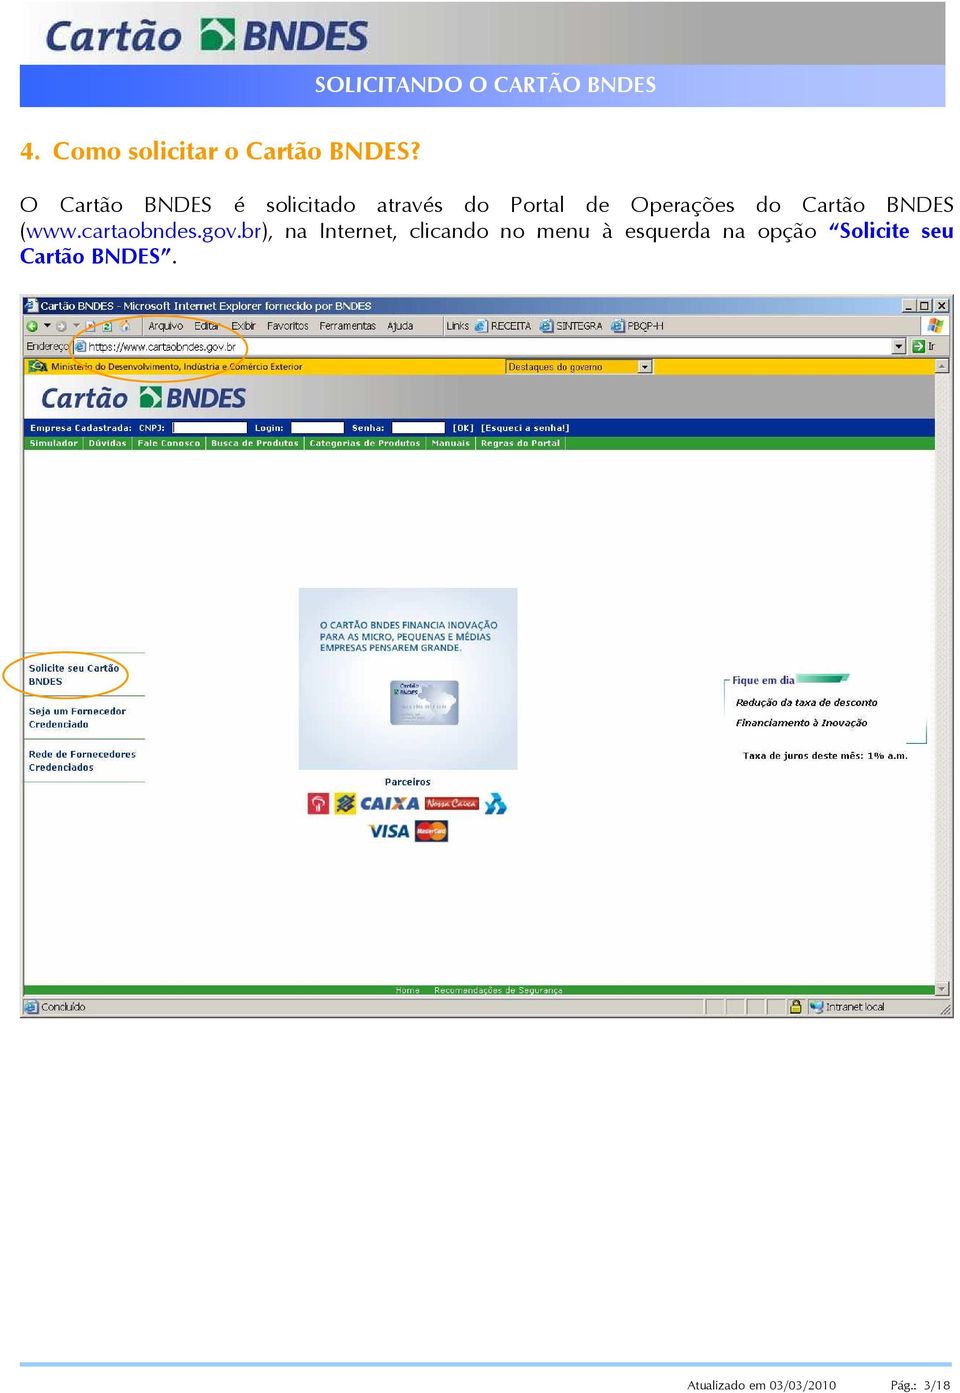 Cartão BNDES (www.cartaobndes.gov.